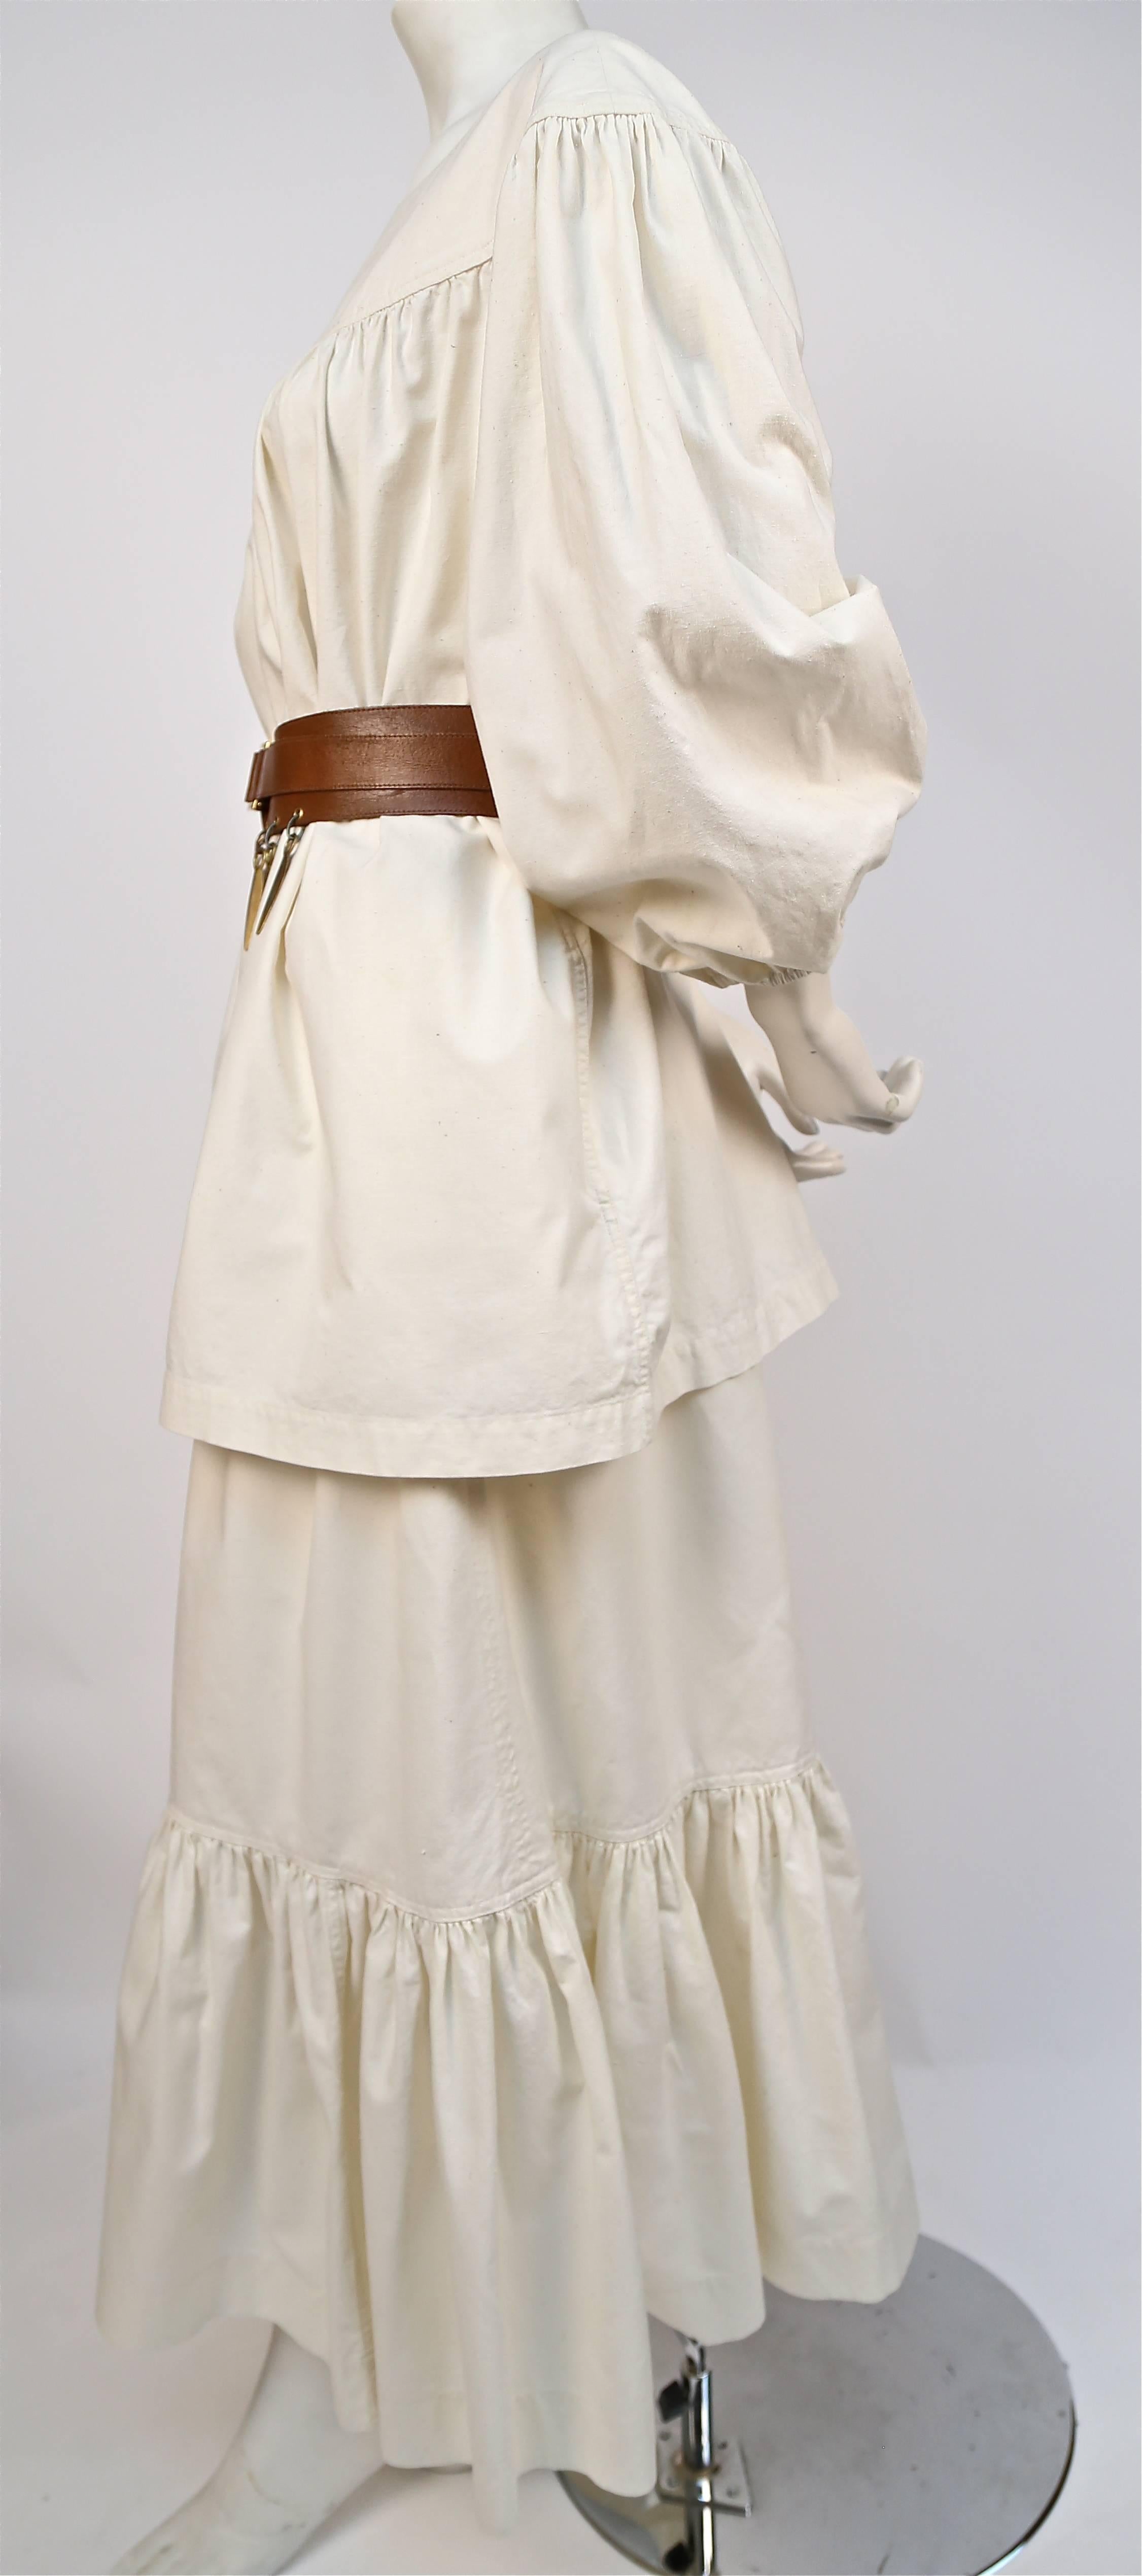 Beige 1970's YVES SAINT LAURENT cream cotton muslin peasant top and skirt